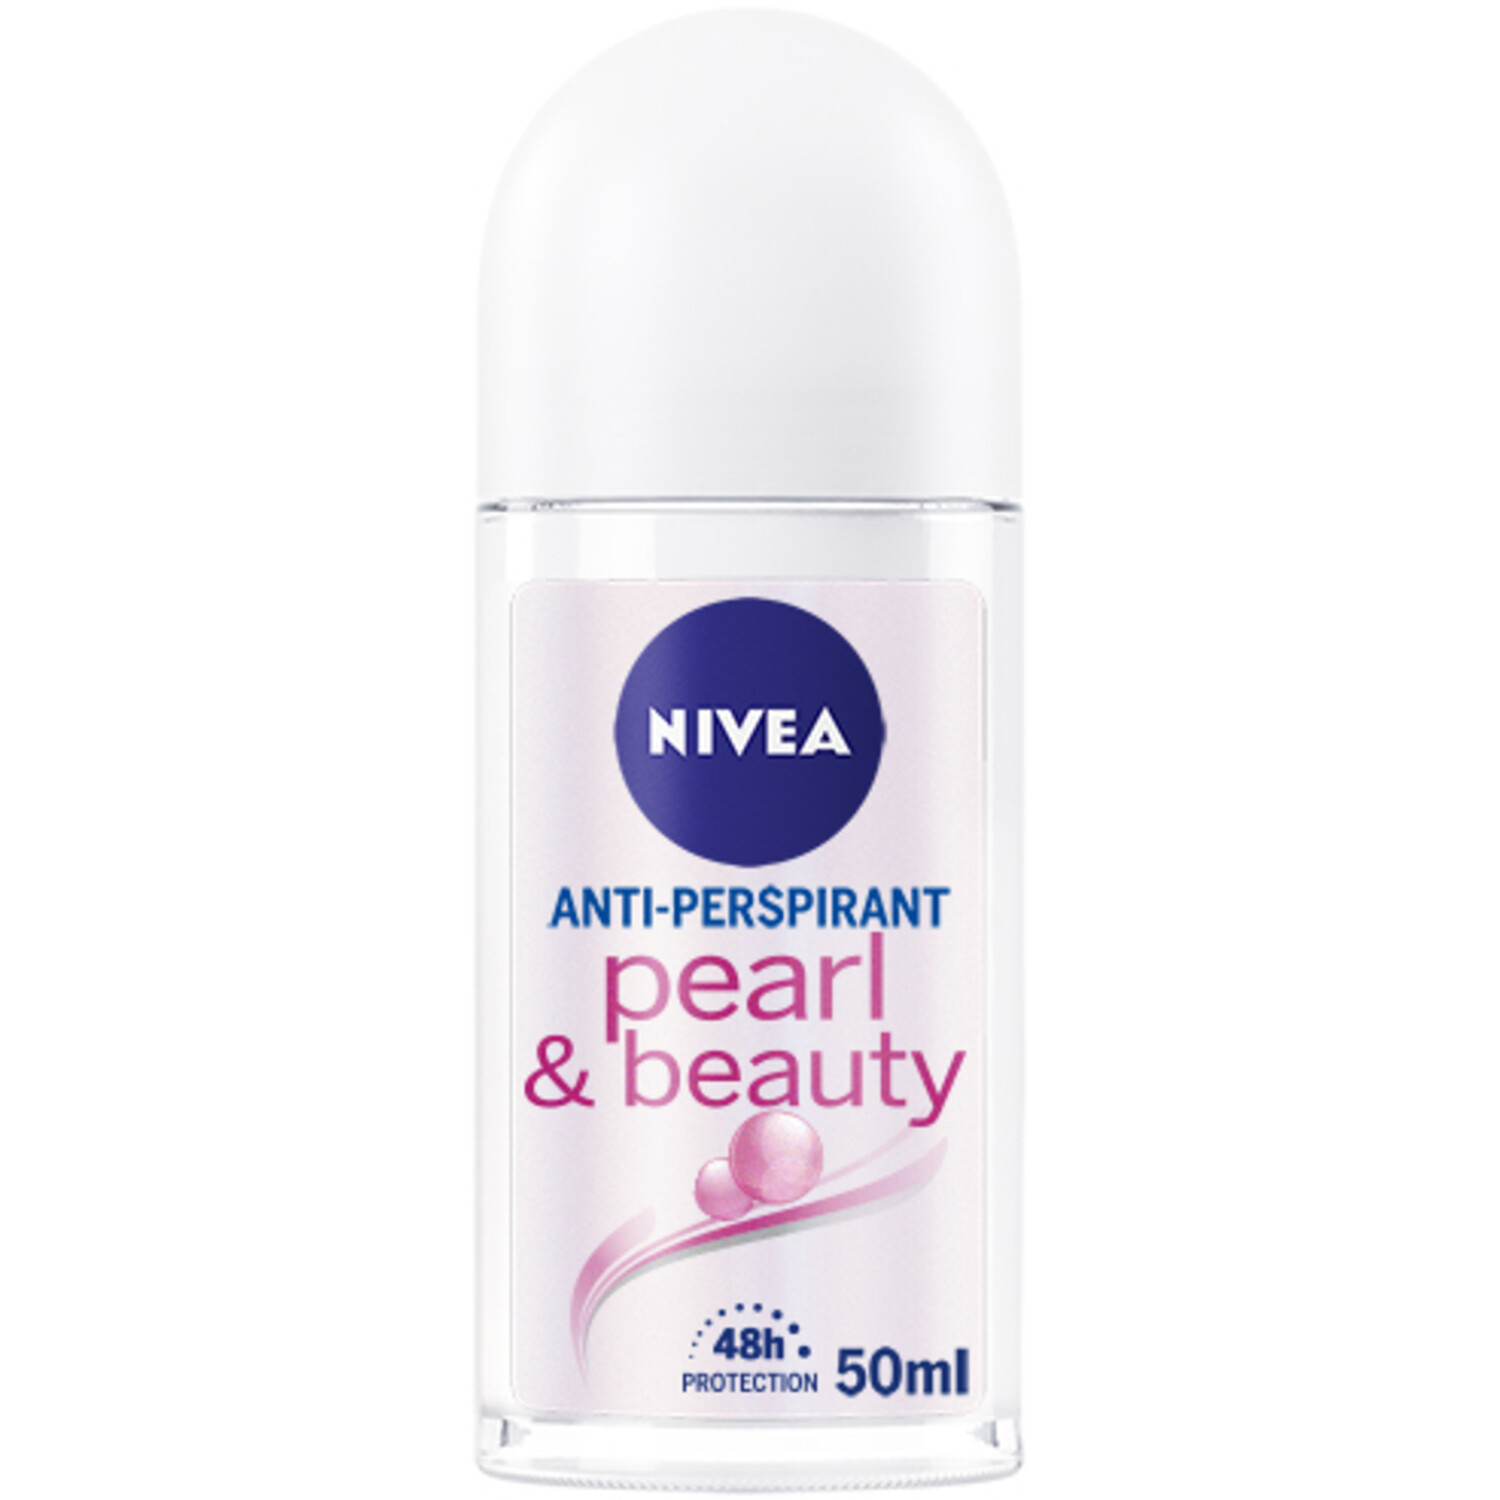 Nivea Pearl & Beauty Roll On Deodorant 50ml - White Image